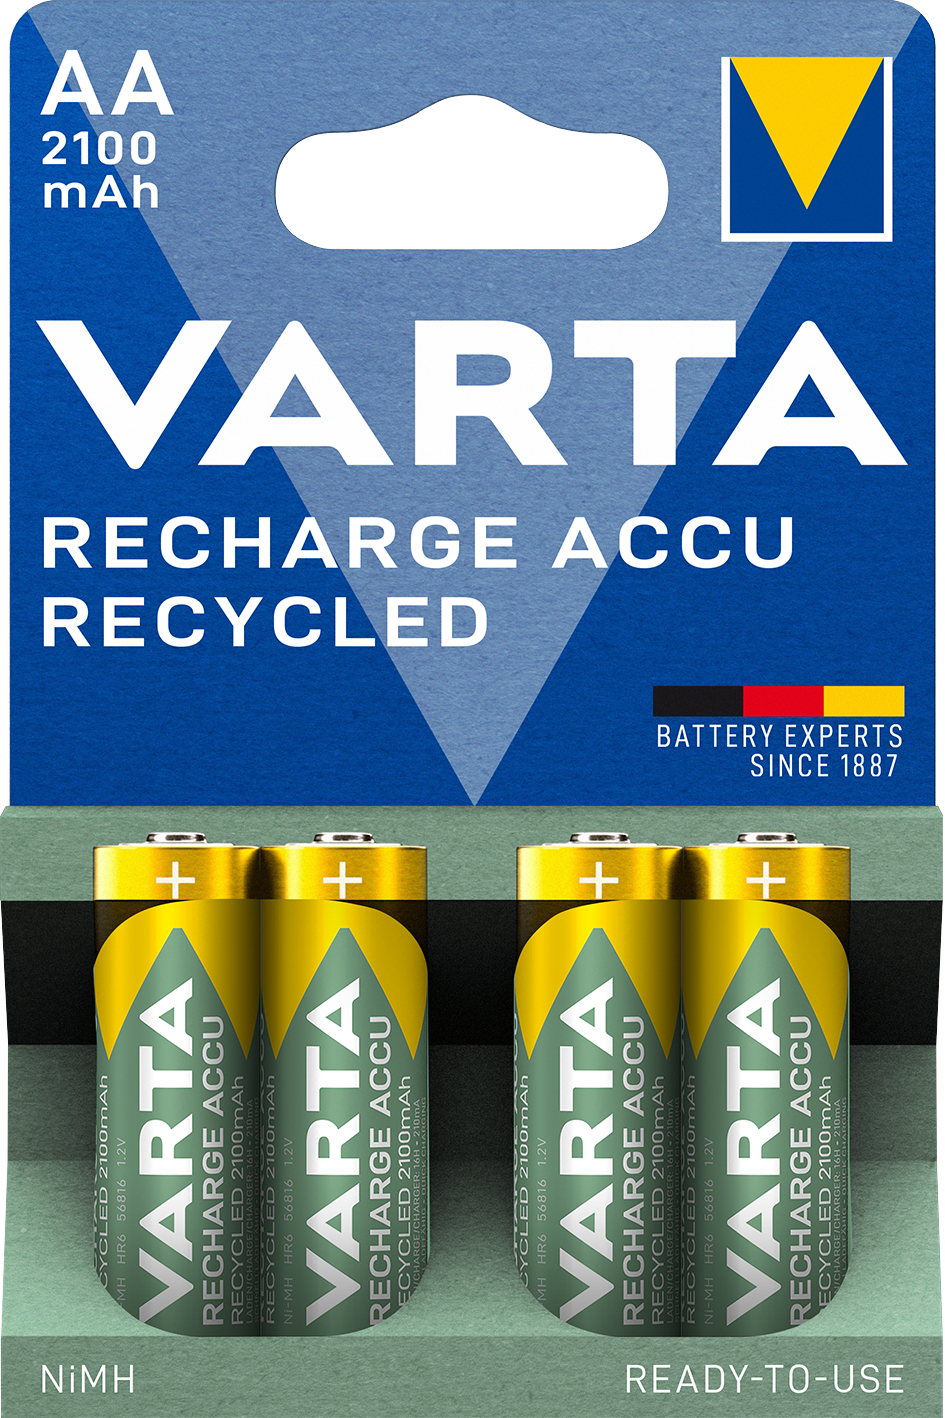 VARTA RECHARGE ACCU Recycled AA 2100mAh Blister 4